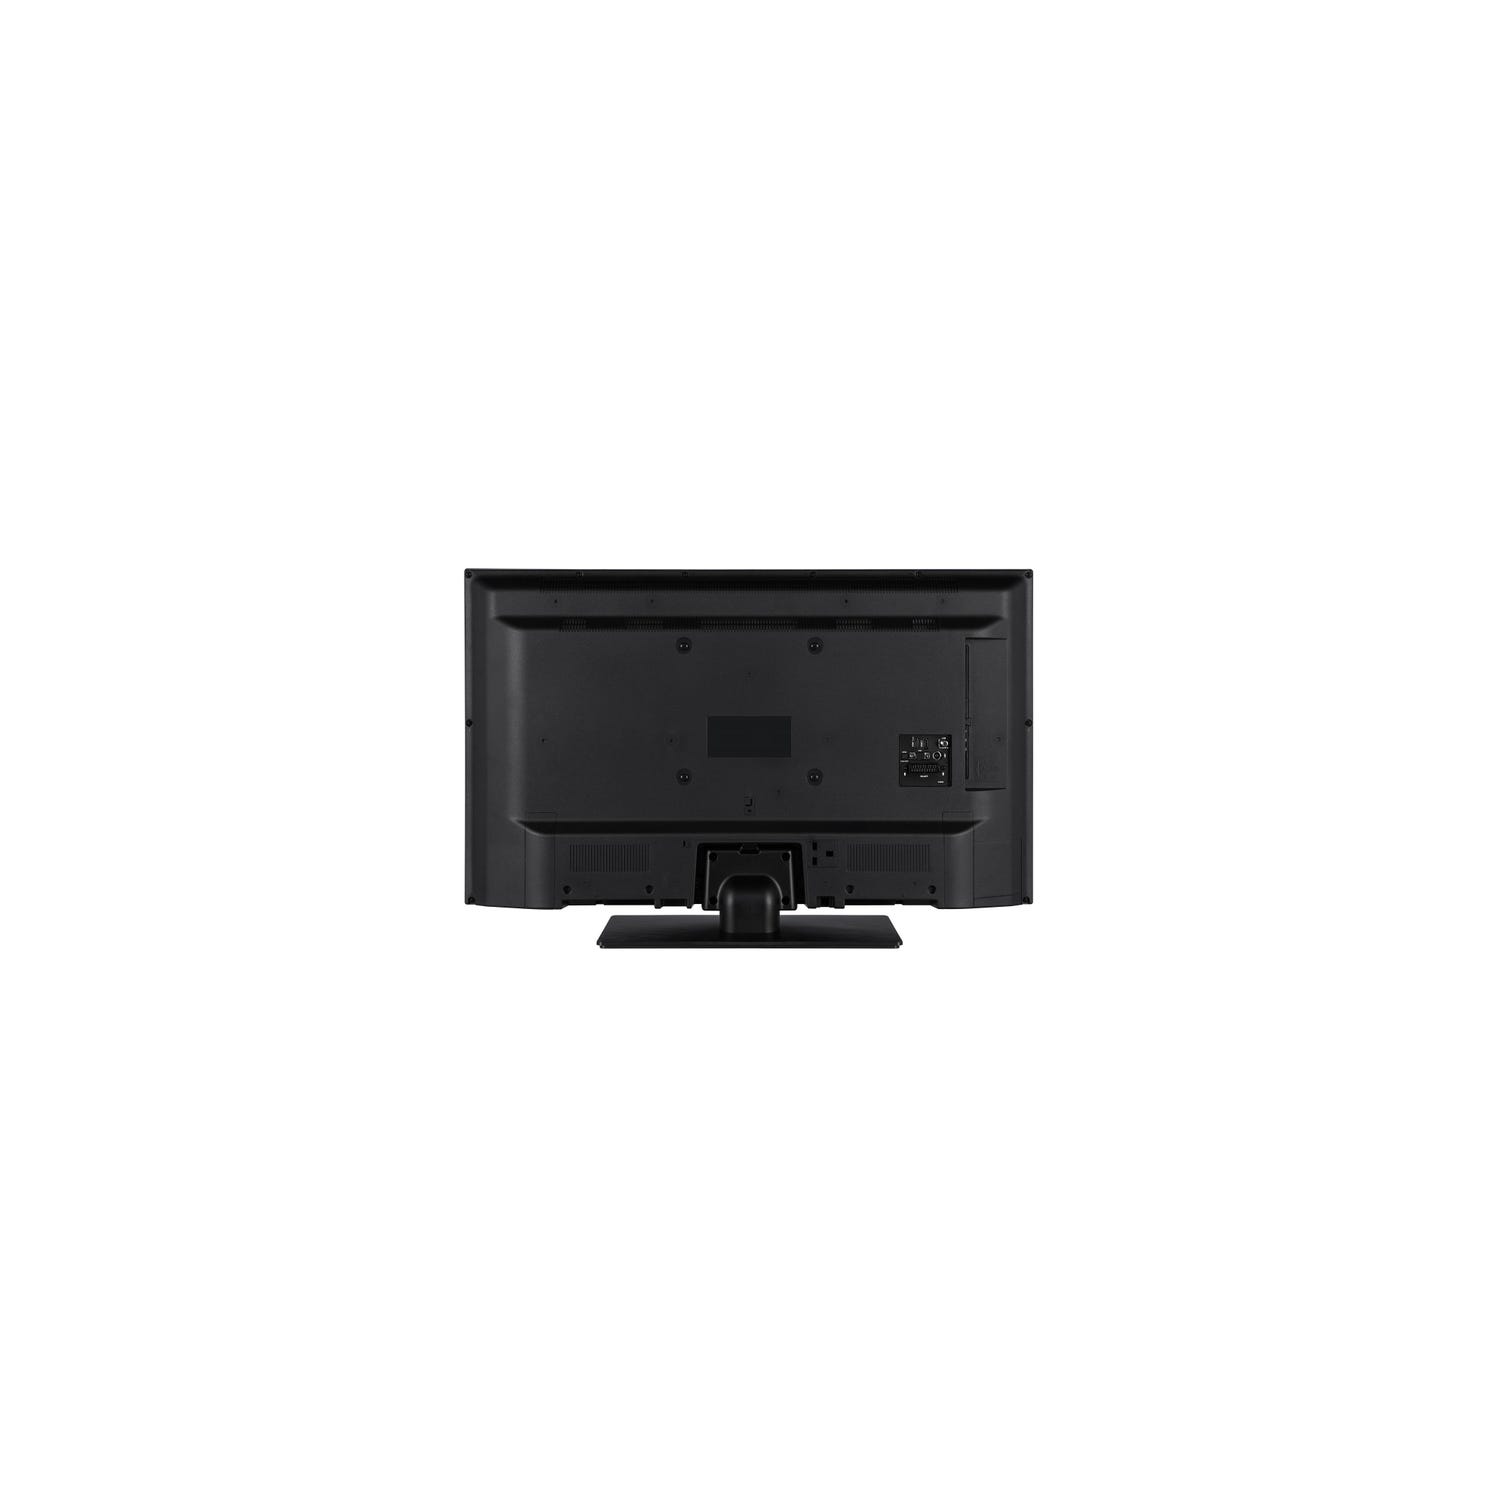 Panasonic 43" Full HD LED TV with Freeview HD - TX-43G301B  NEW 2020 - 1